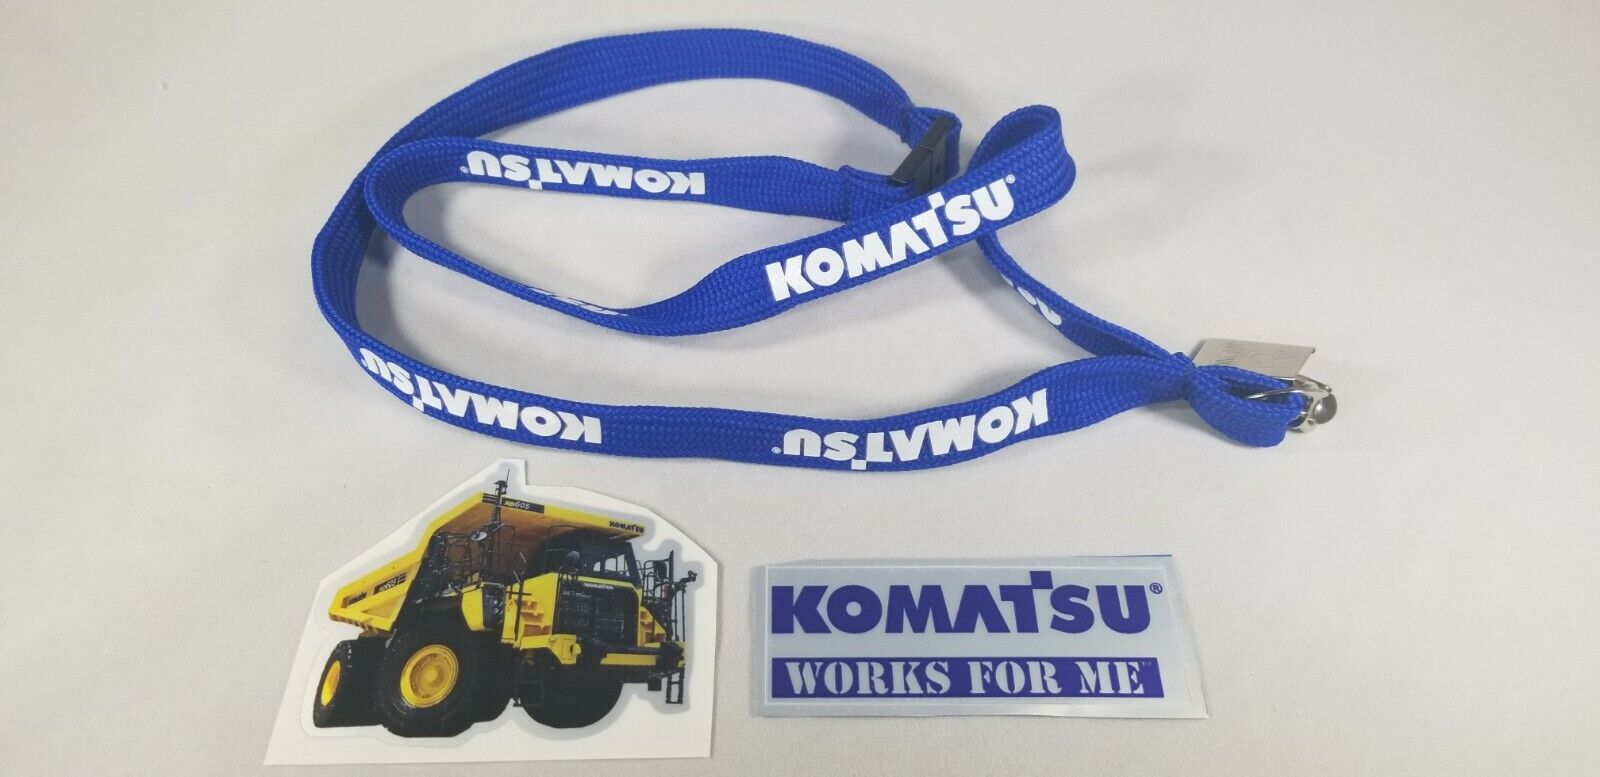 Komatsu Lanyard & Hard Hat Stickers  for Oilfield Rig Union Construction Crane 